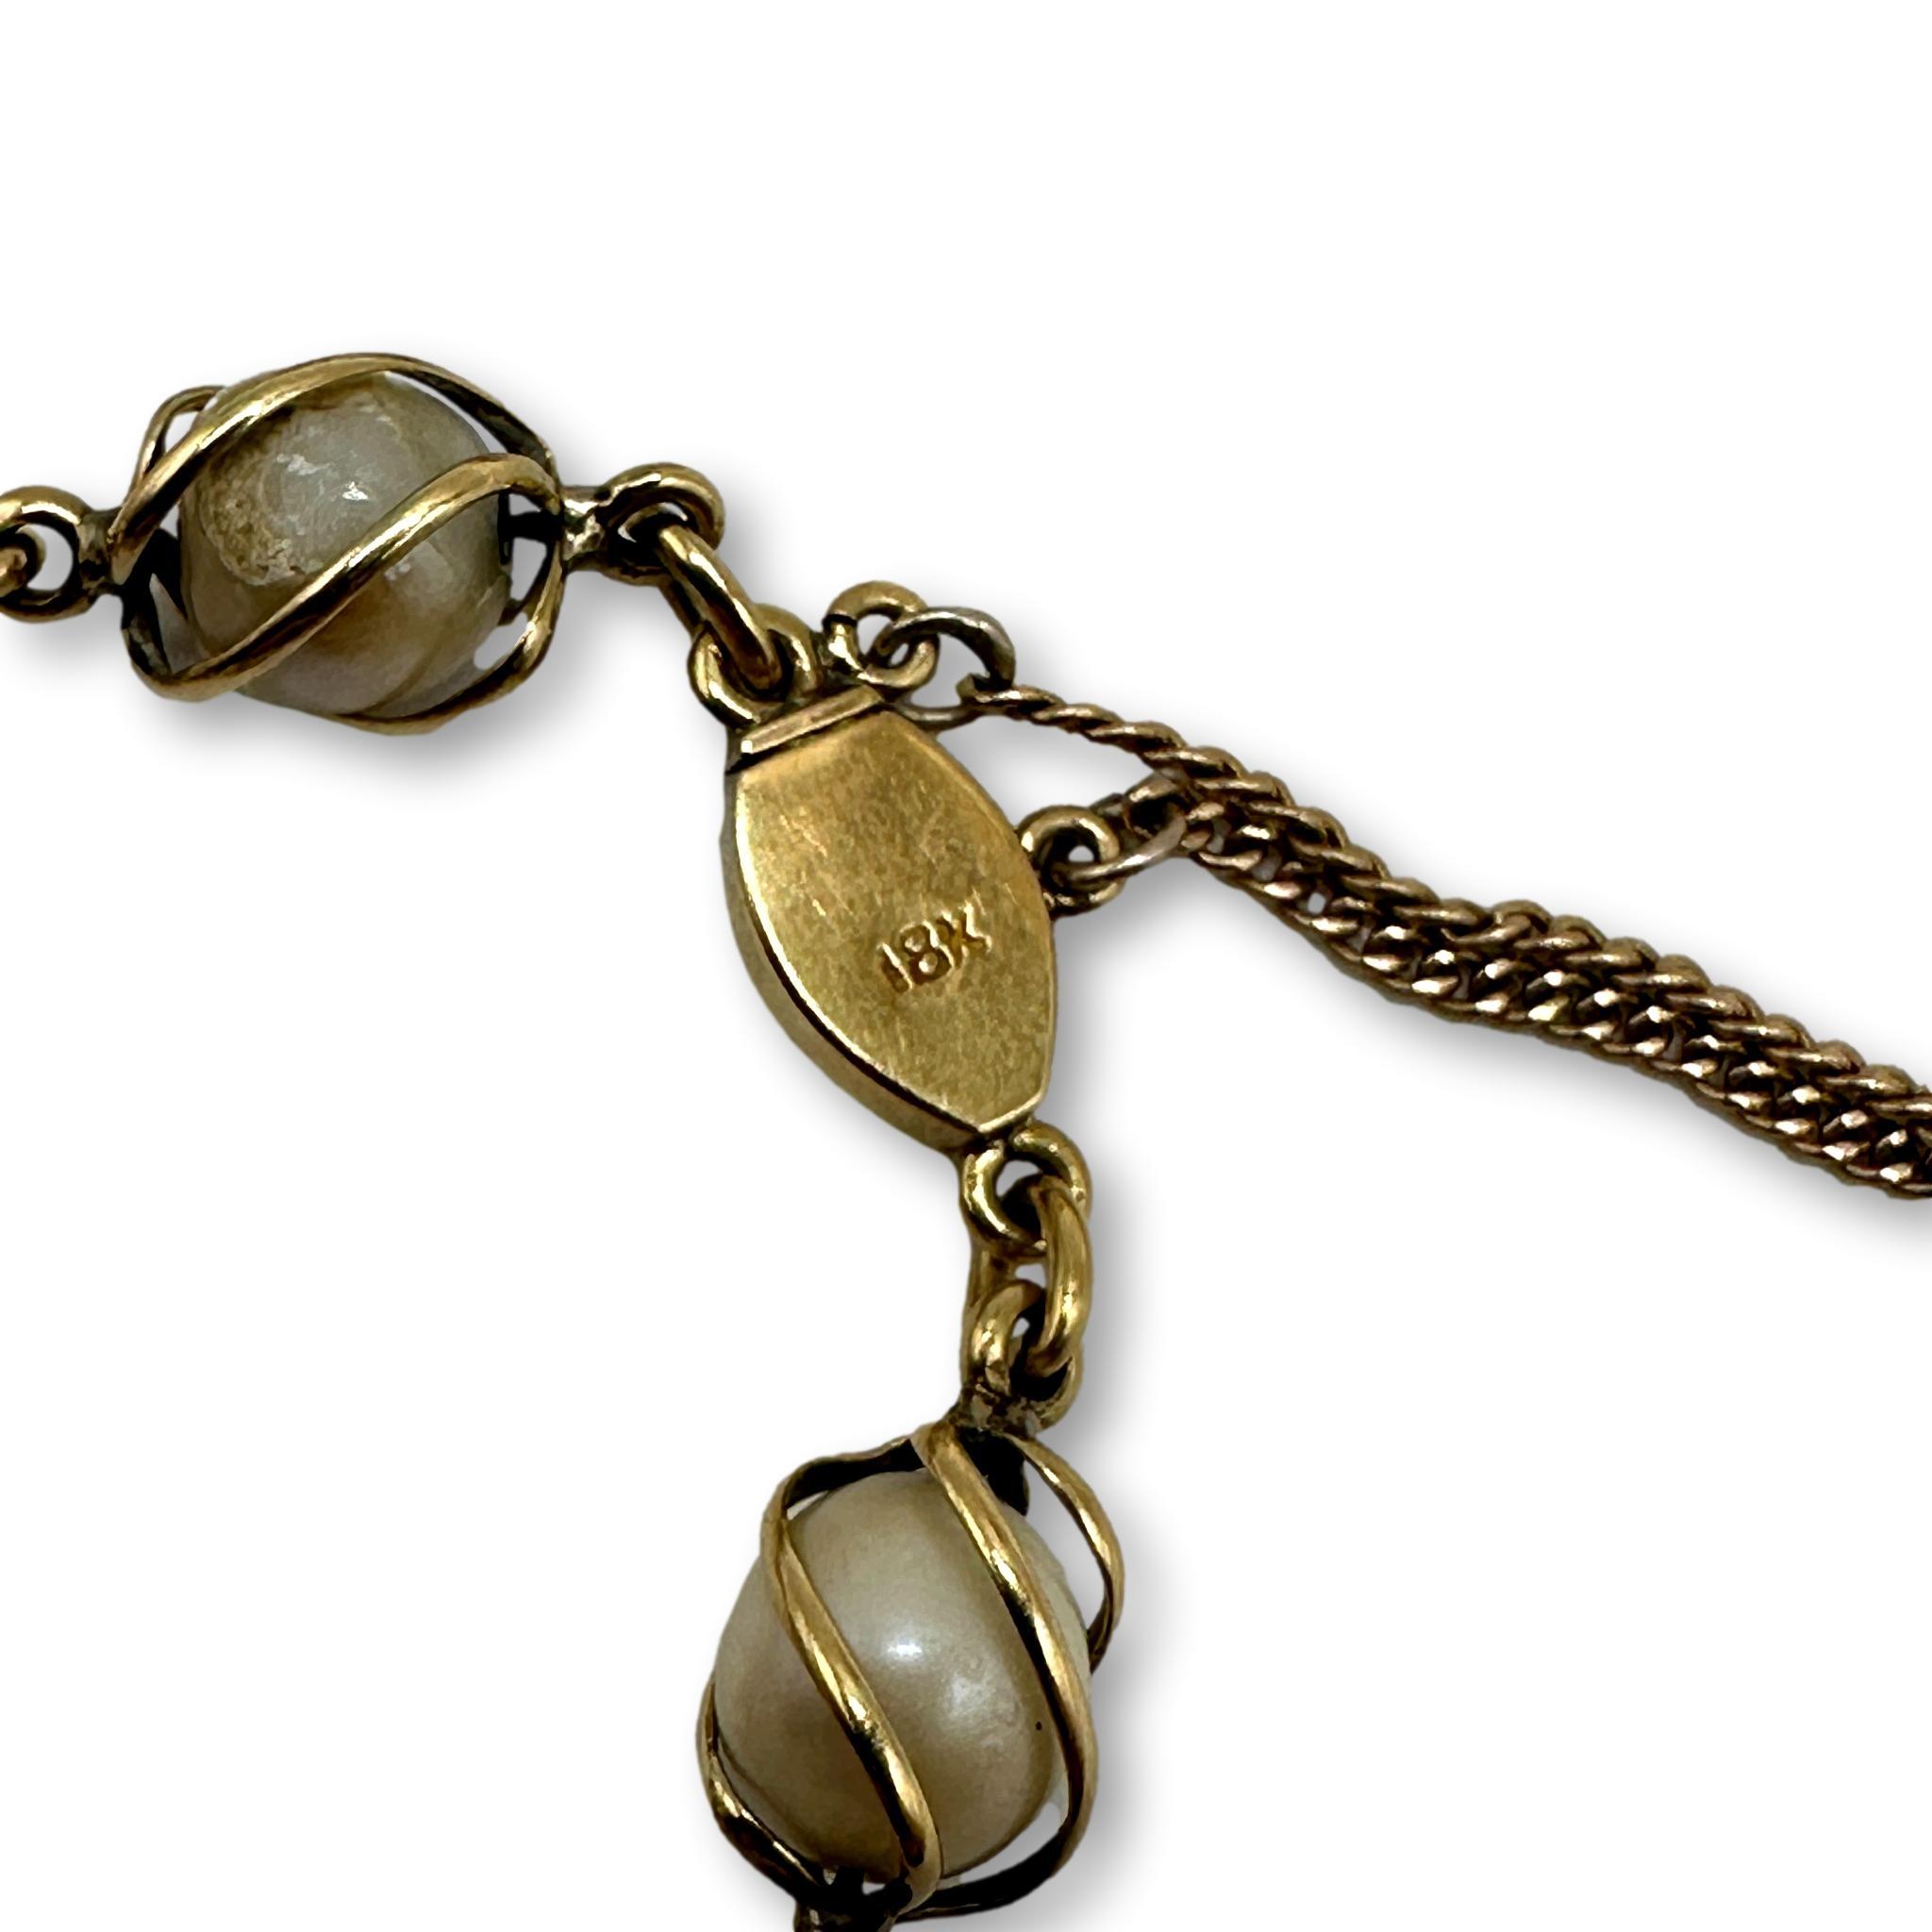 Vintage 14K Gold Pearl Jewelry